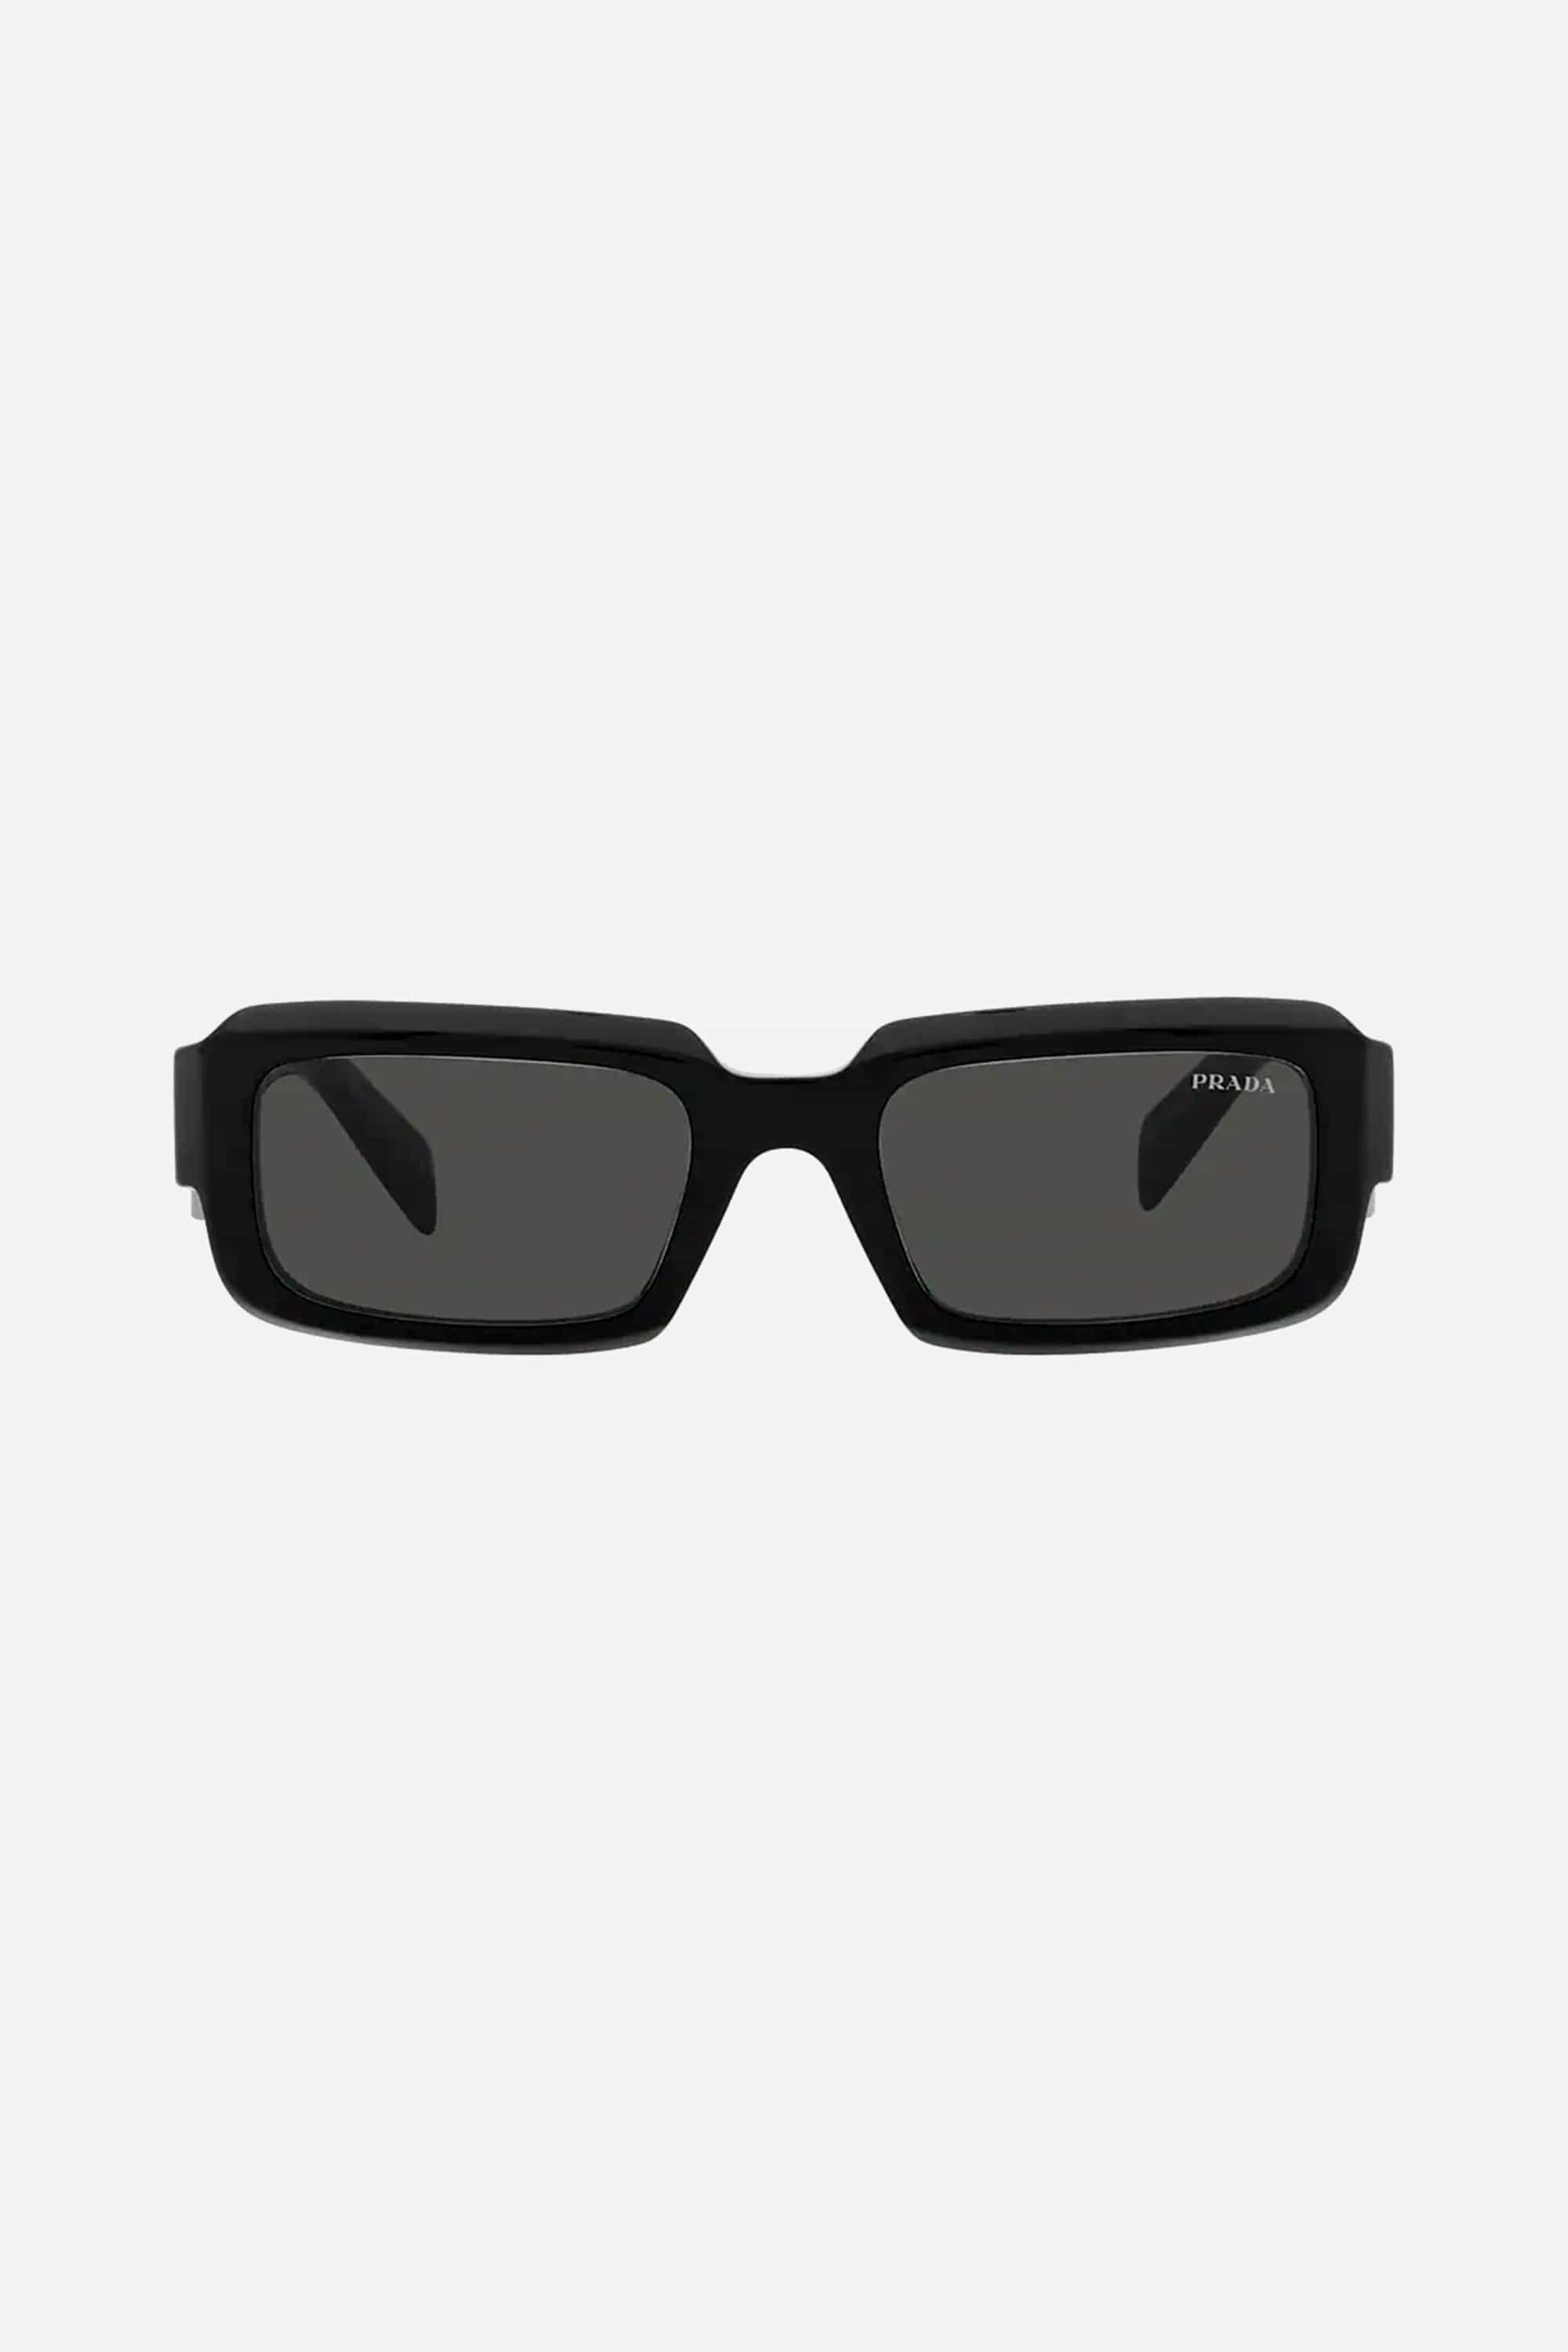 Prada squared PR 27ZS black sunglasses - Eyewear Club